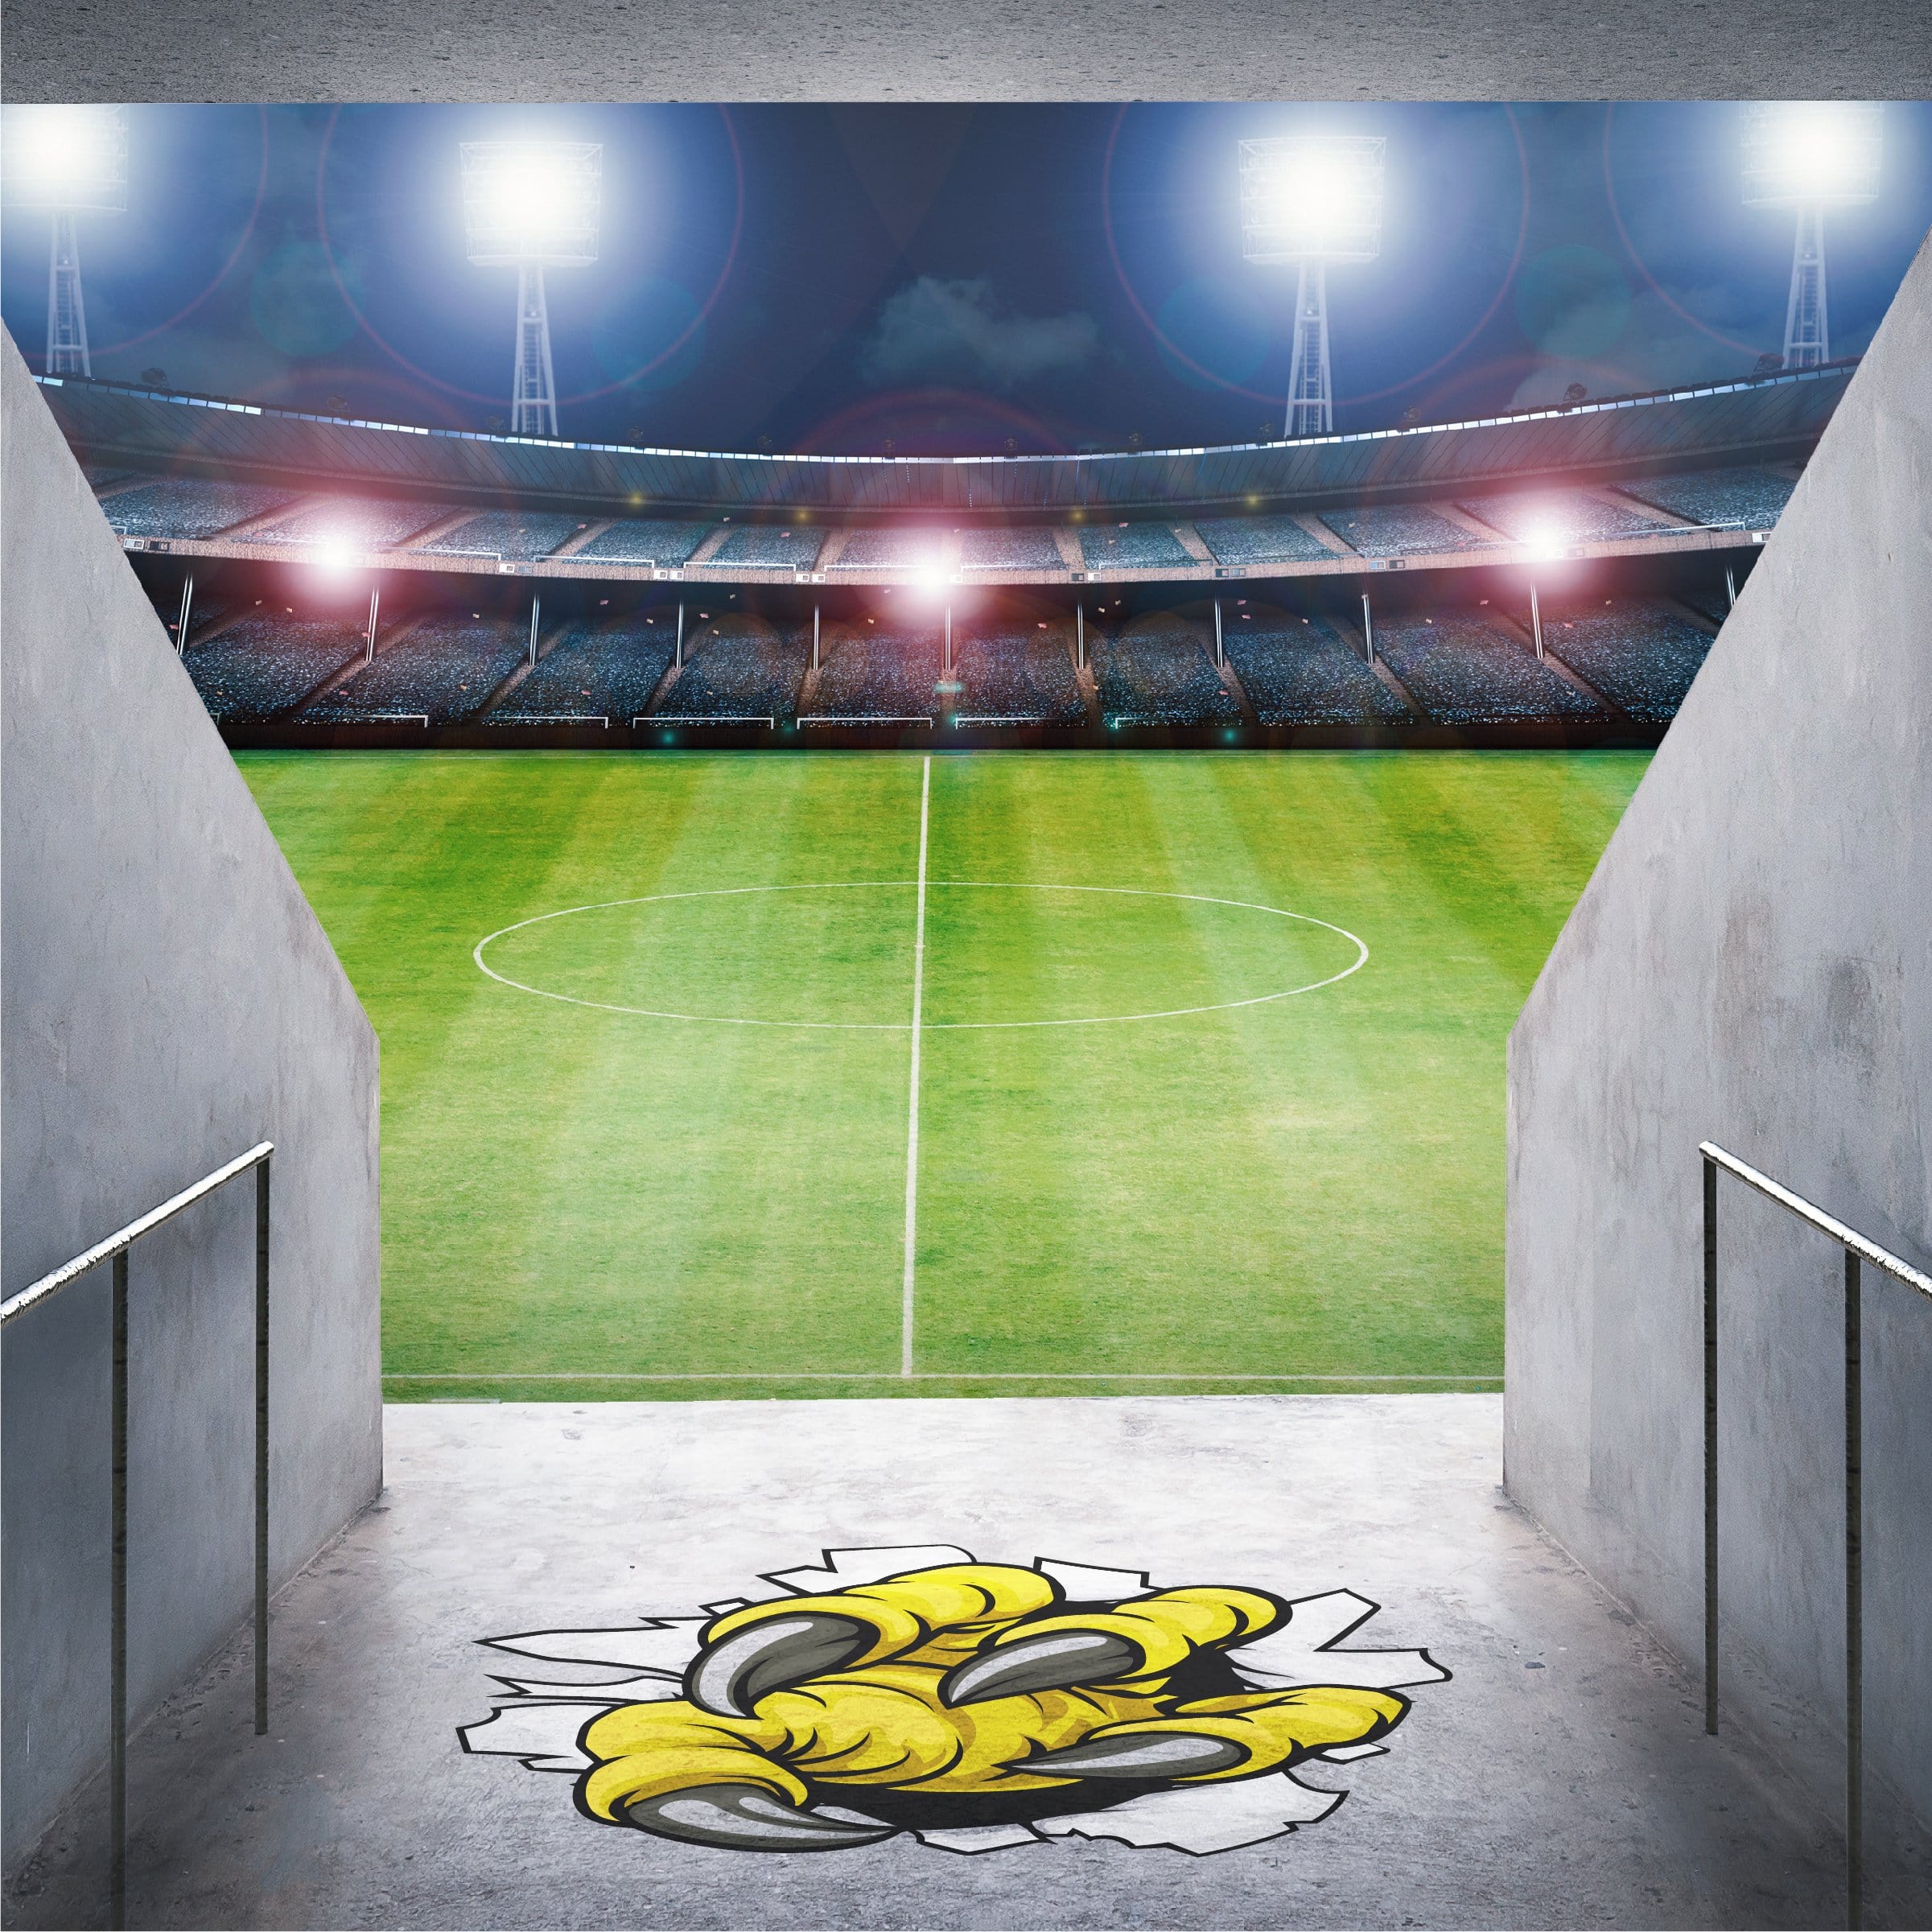 Sport team's logo sidewalk decal in a sport stadium